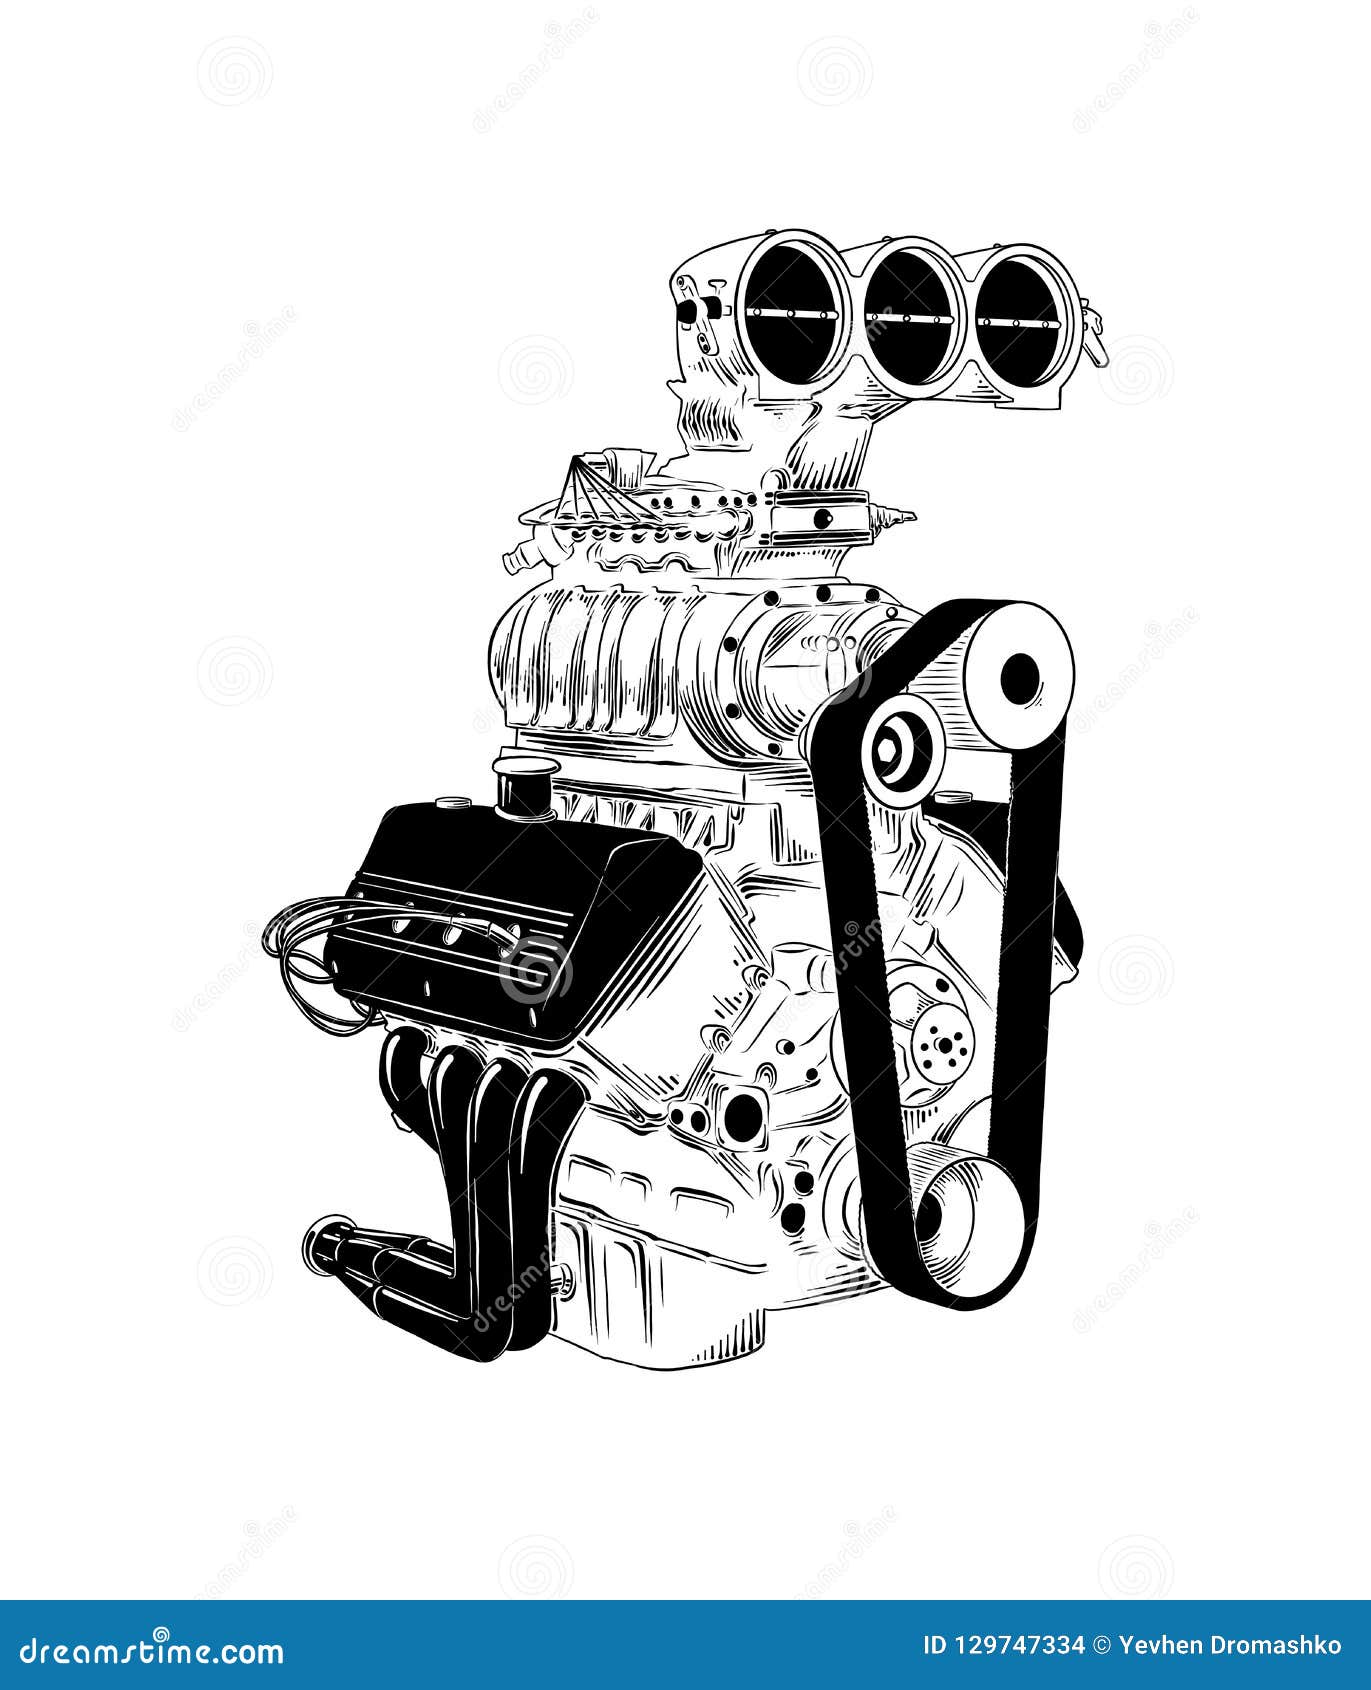 Premium Vector  Motorcycle engine hand drawn sketch engraving style logo  vector illustration